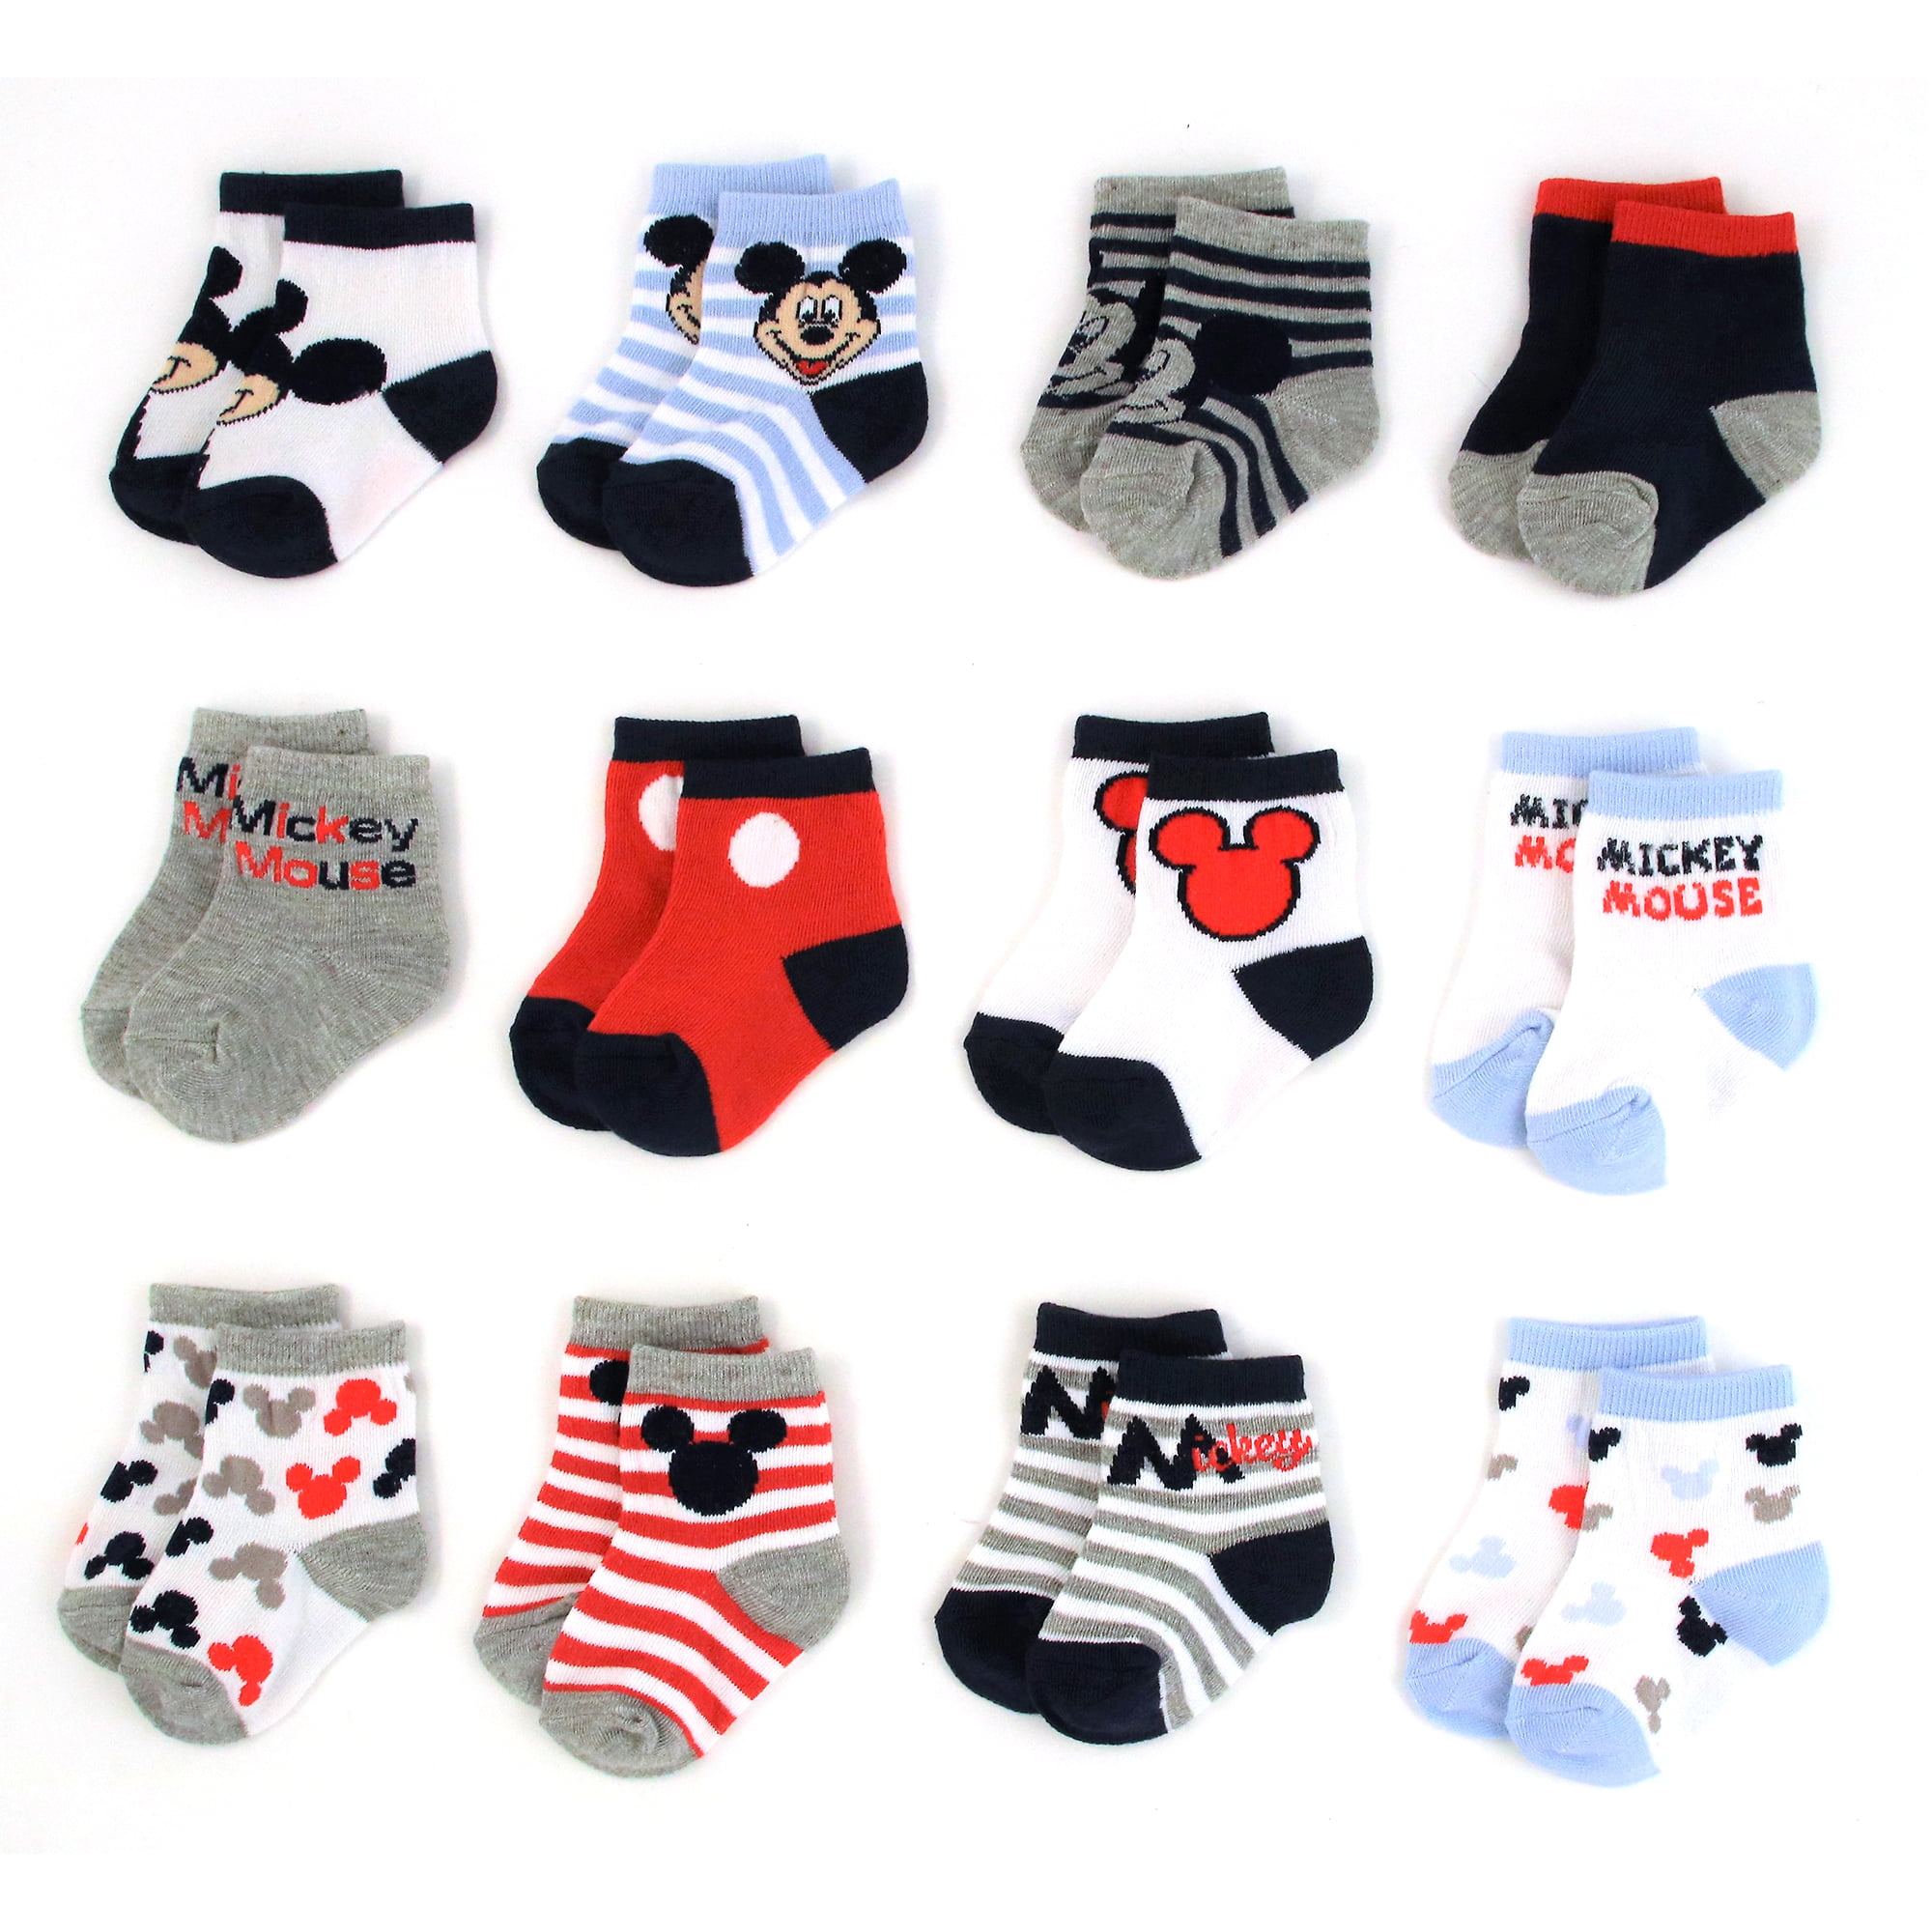 BABY Socks 3 Pk Sox GRIP or PLAIN SOLE 0-6m 6-12m or 12-24m Cute Boy & Girl NEW 